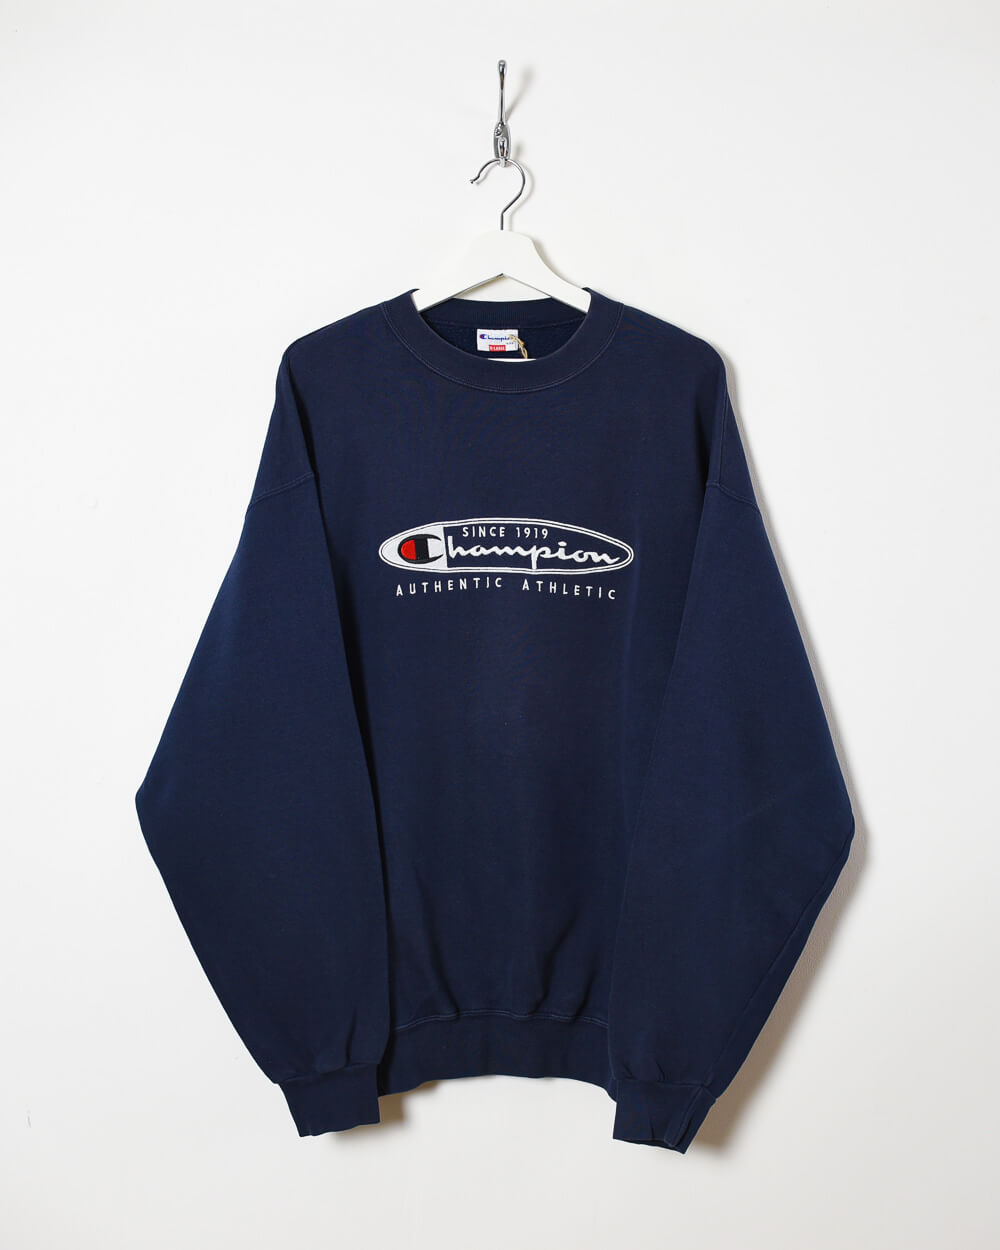 Vintage 90s Cotton Navy Champion Authentic Athletic Sweatshirt - X ...